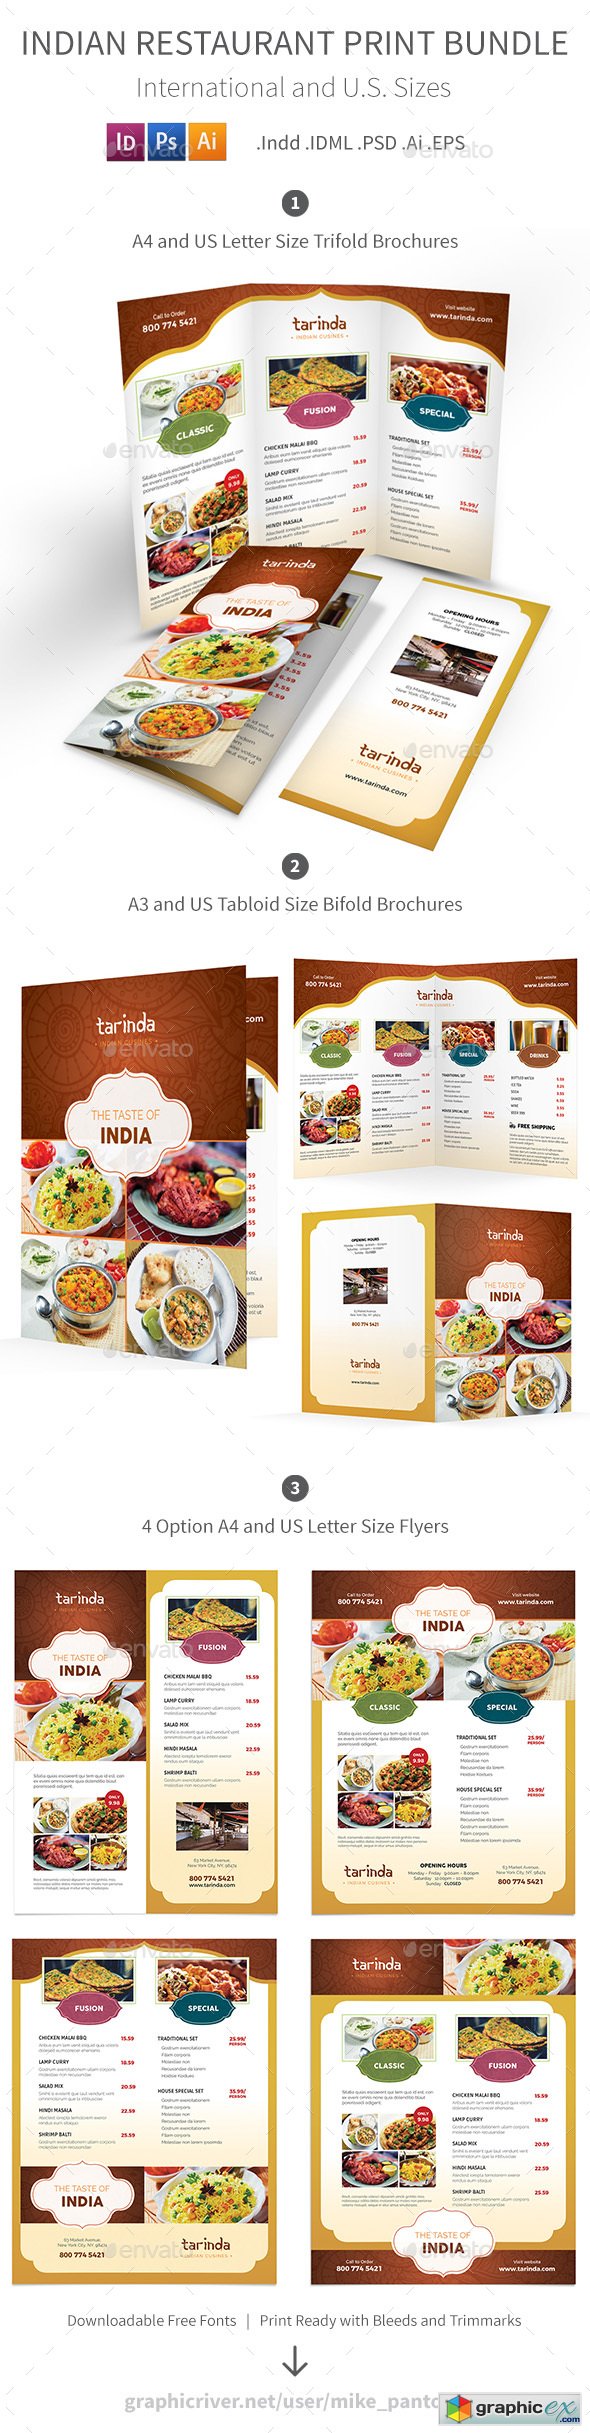 Indian Restaurant Menu Print Bundle